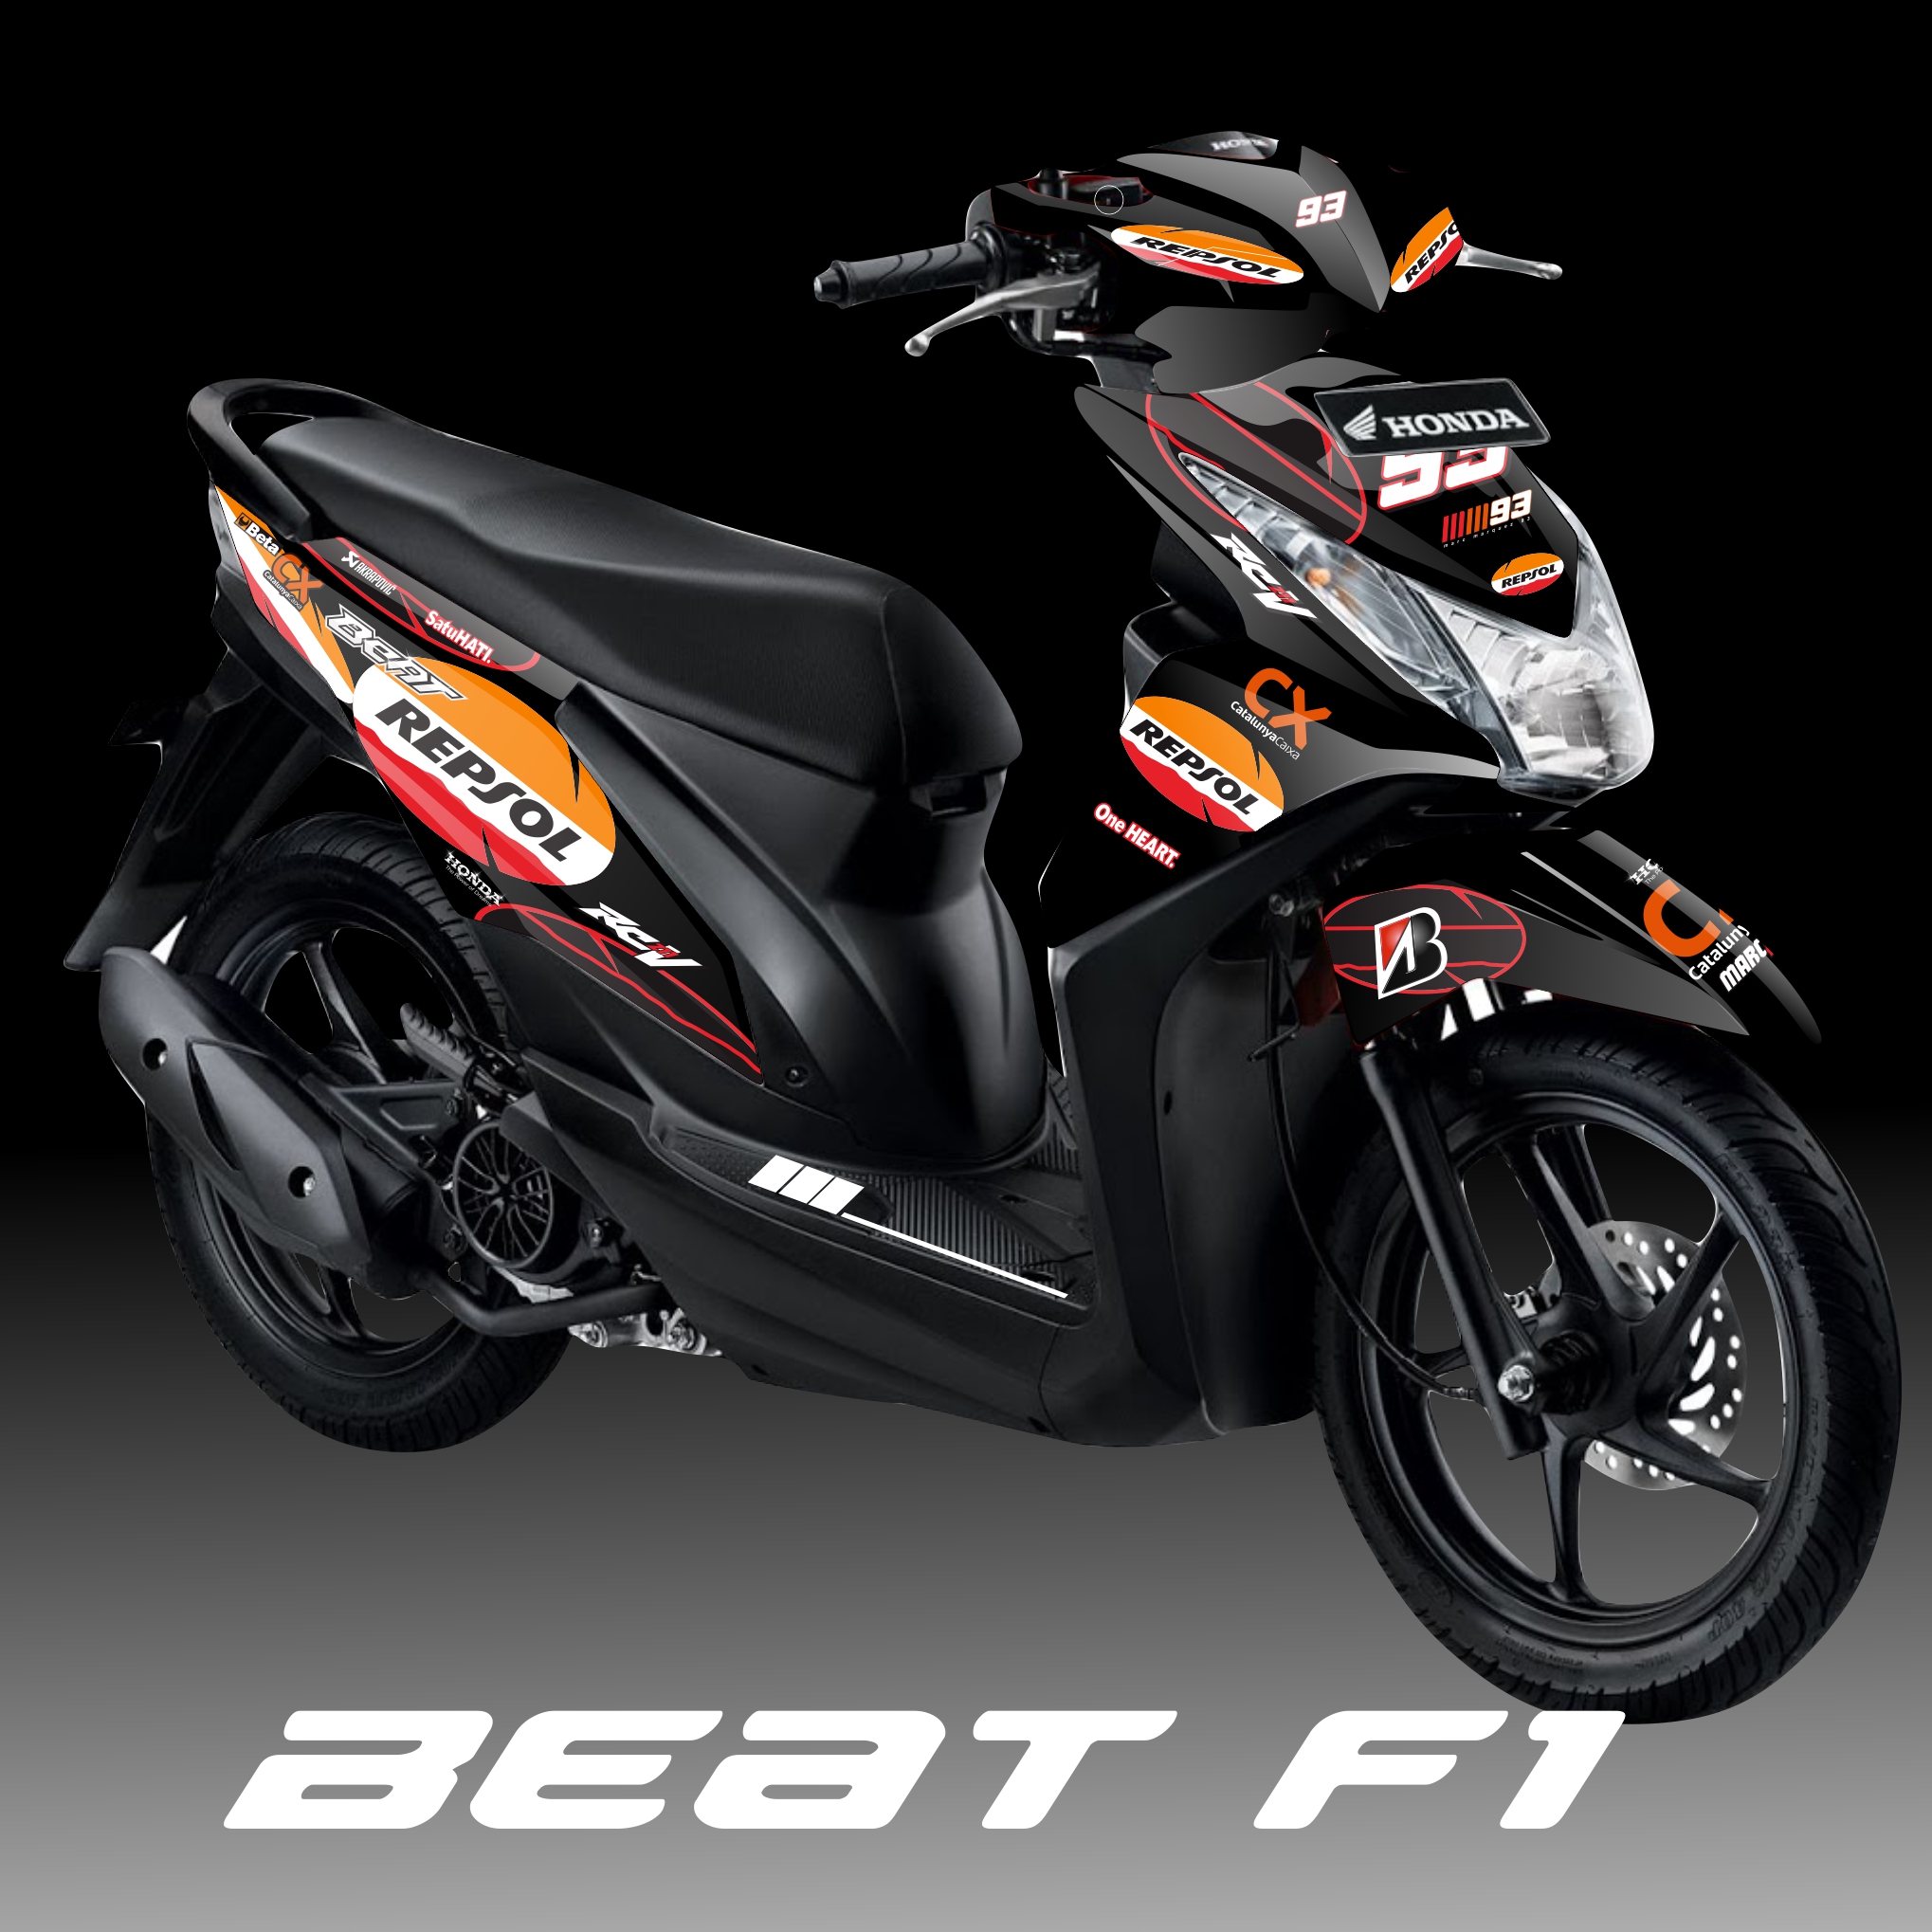 Decal Stiker Full Body Honda Beat F1 Desain Motif Repsol Lazada Indonesia